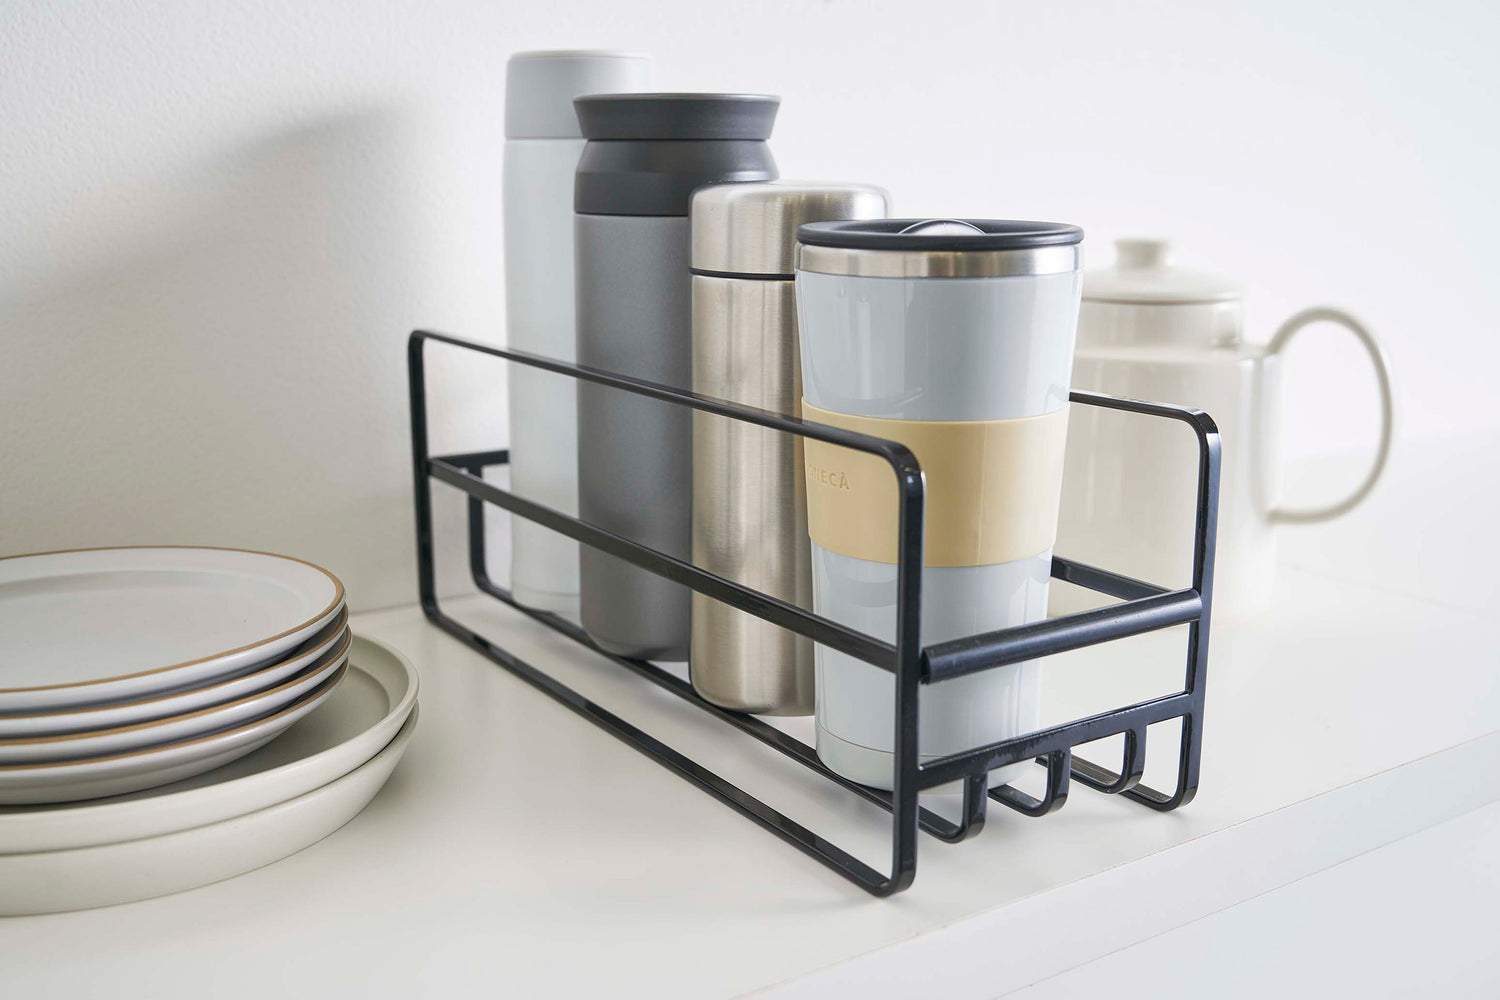 View 9 - Close up of Yamazaki Home black Glass and Mug Cabinet Organizer next to plates on a shelf